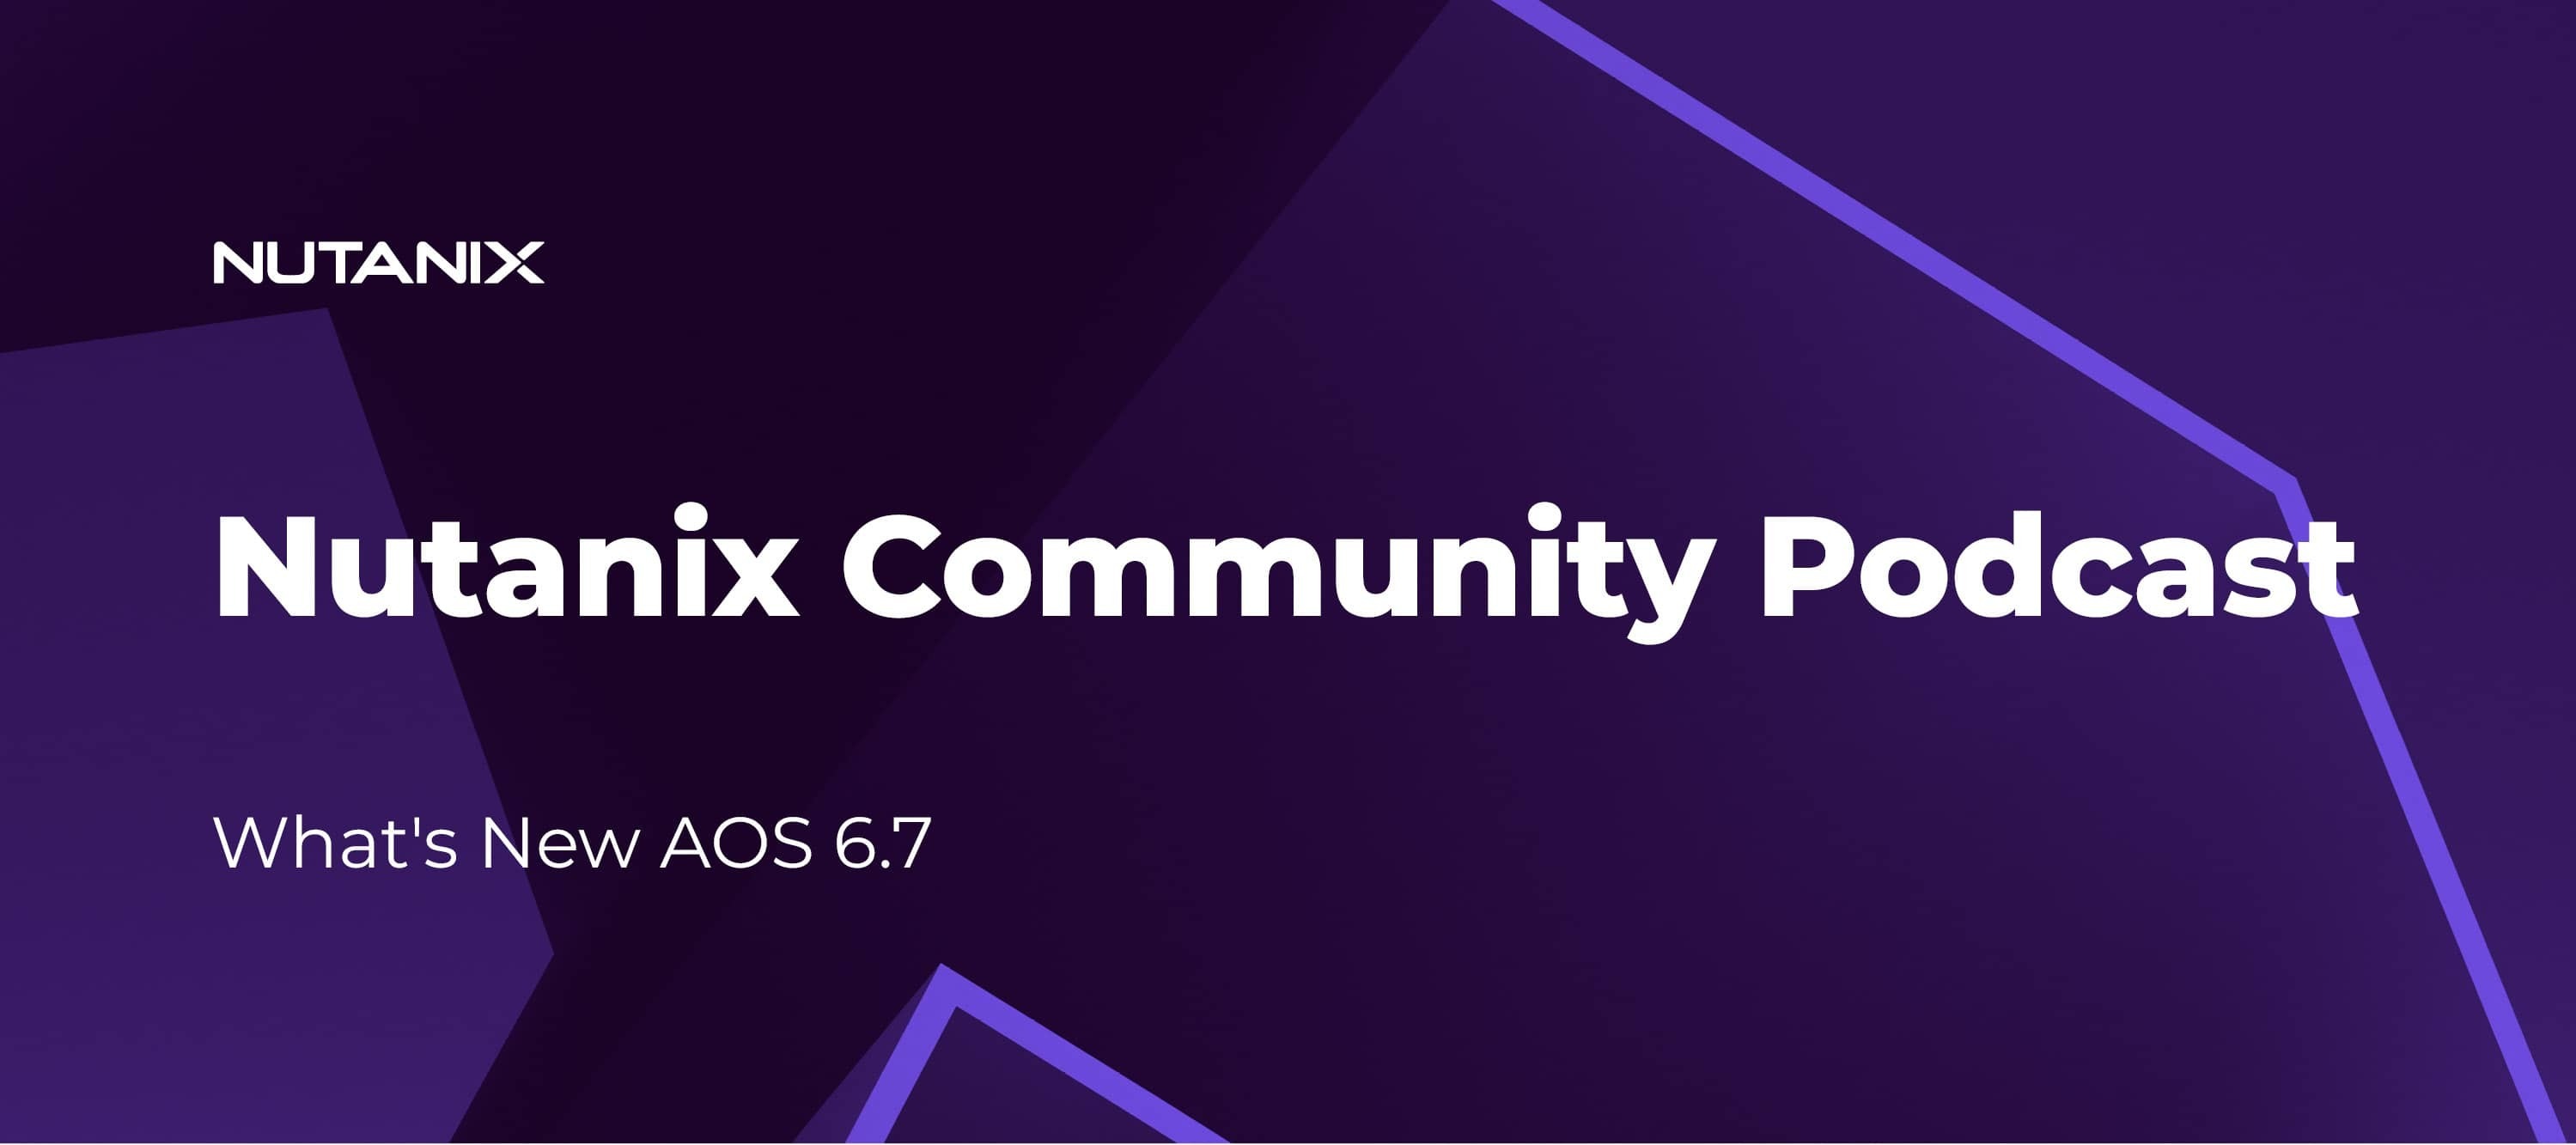 Nutanix Community Podcast: What's New AOS 6.7